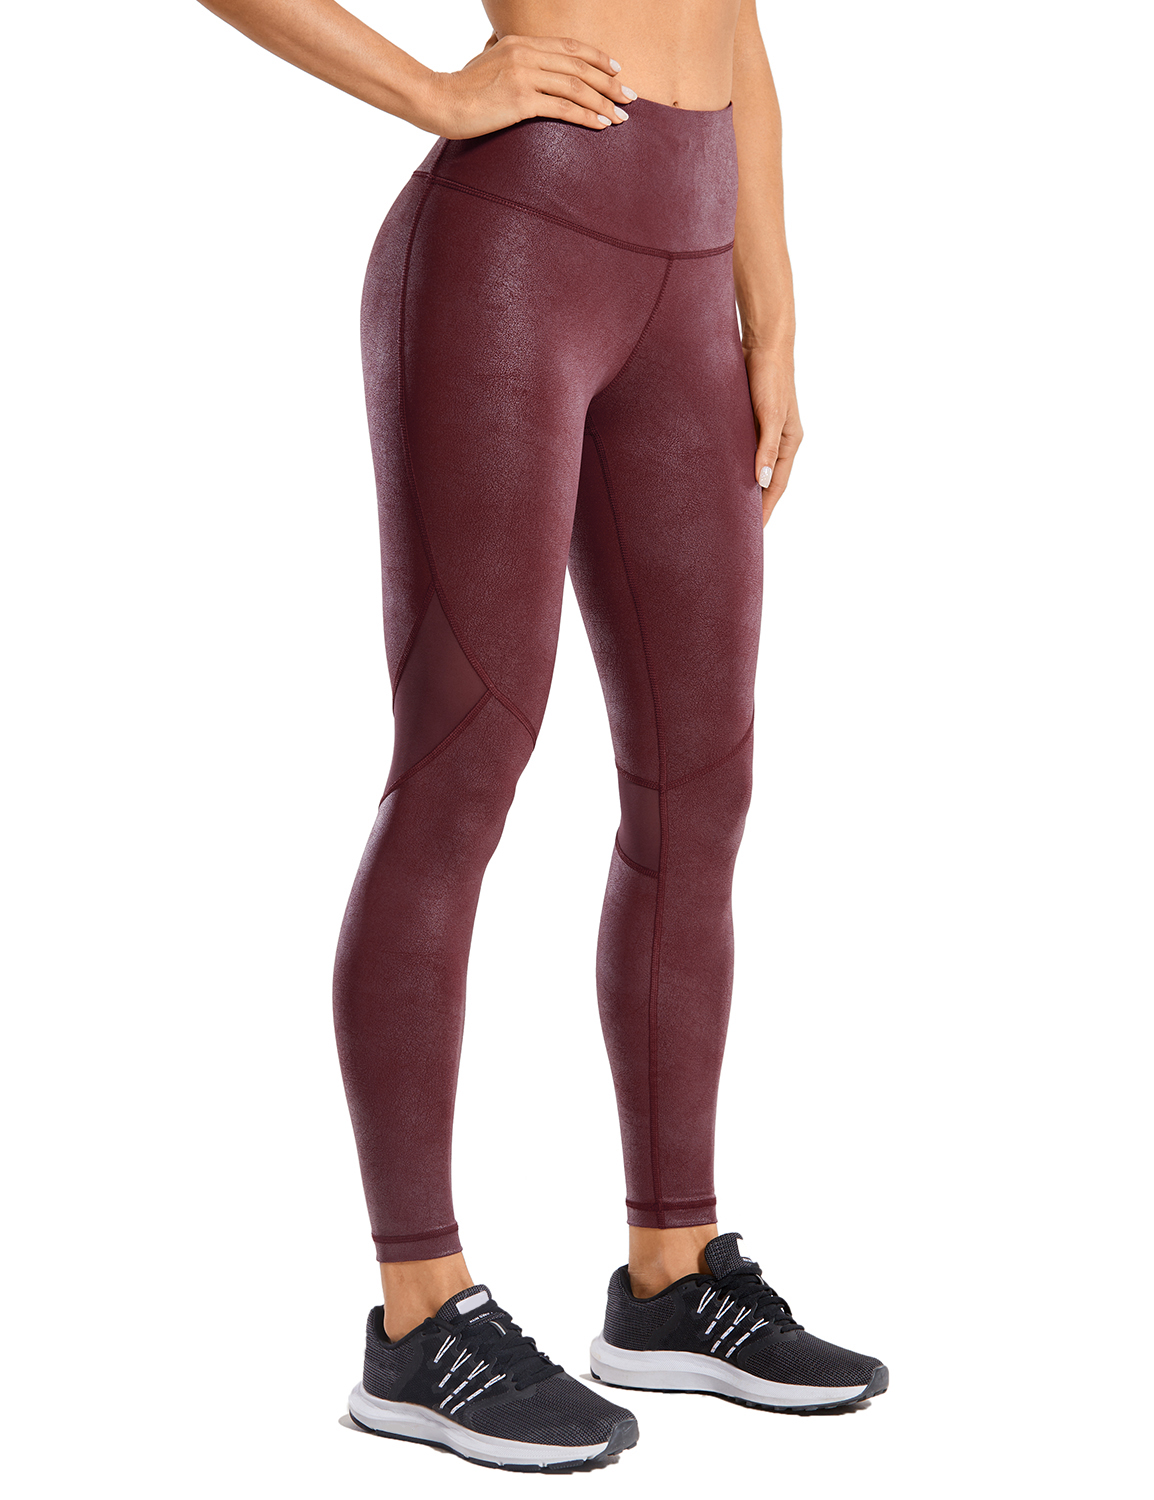 CRZ YOGA Matte Faux Leather Women's Leggings 25 Inches Oblong Mesh Tight  Pants